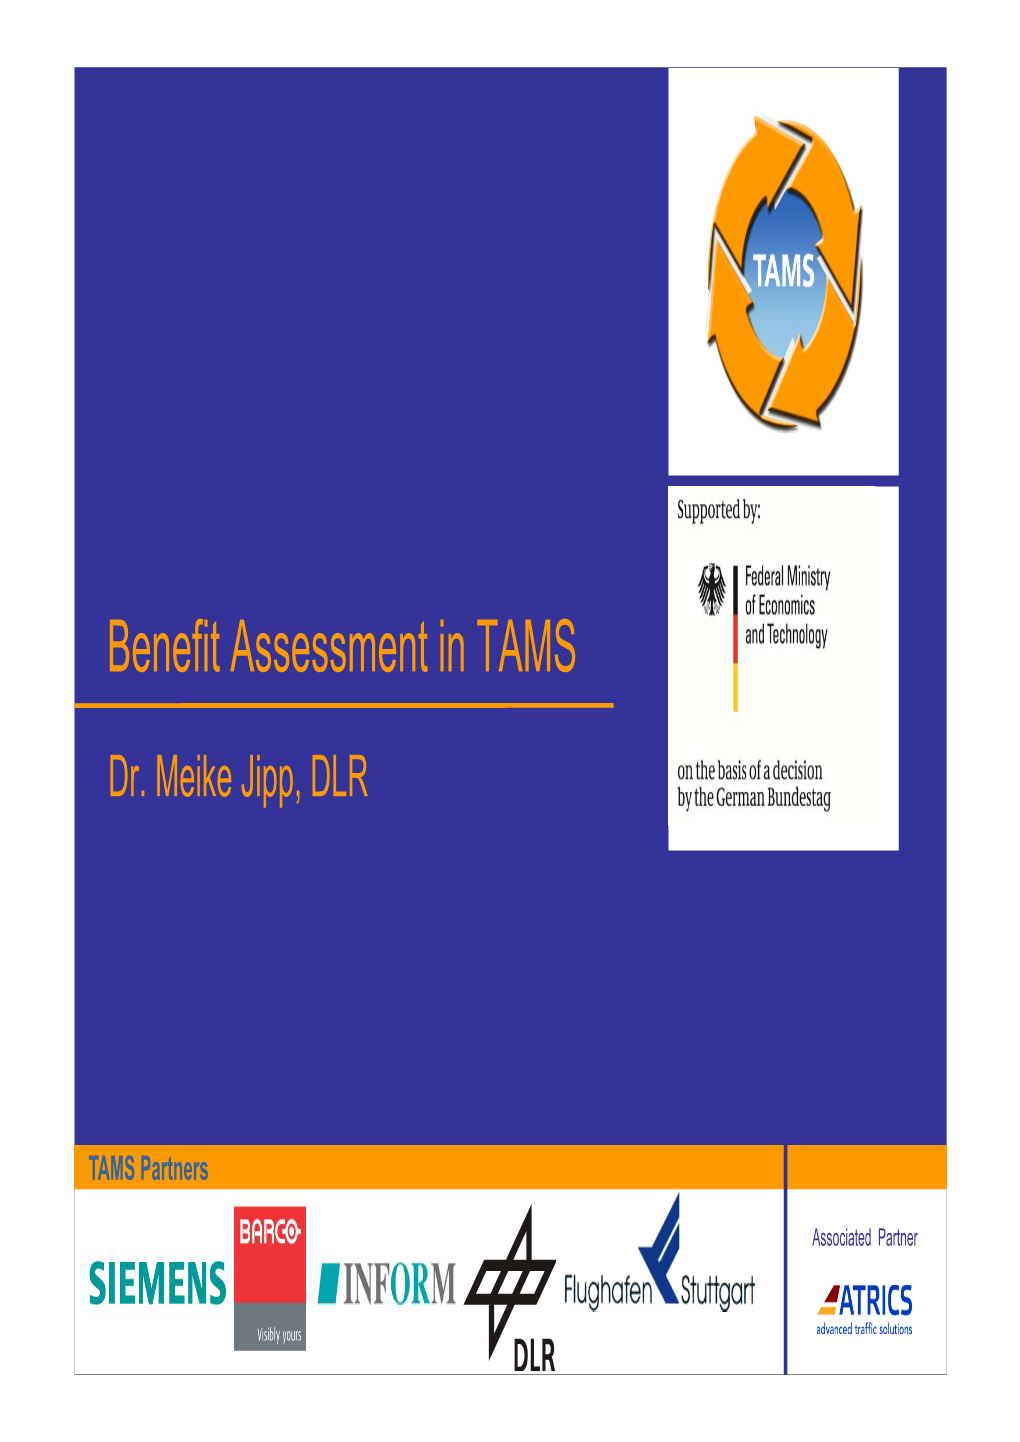 Benefit Assessment in TAMS (Jipp